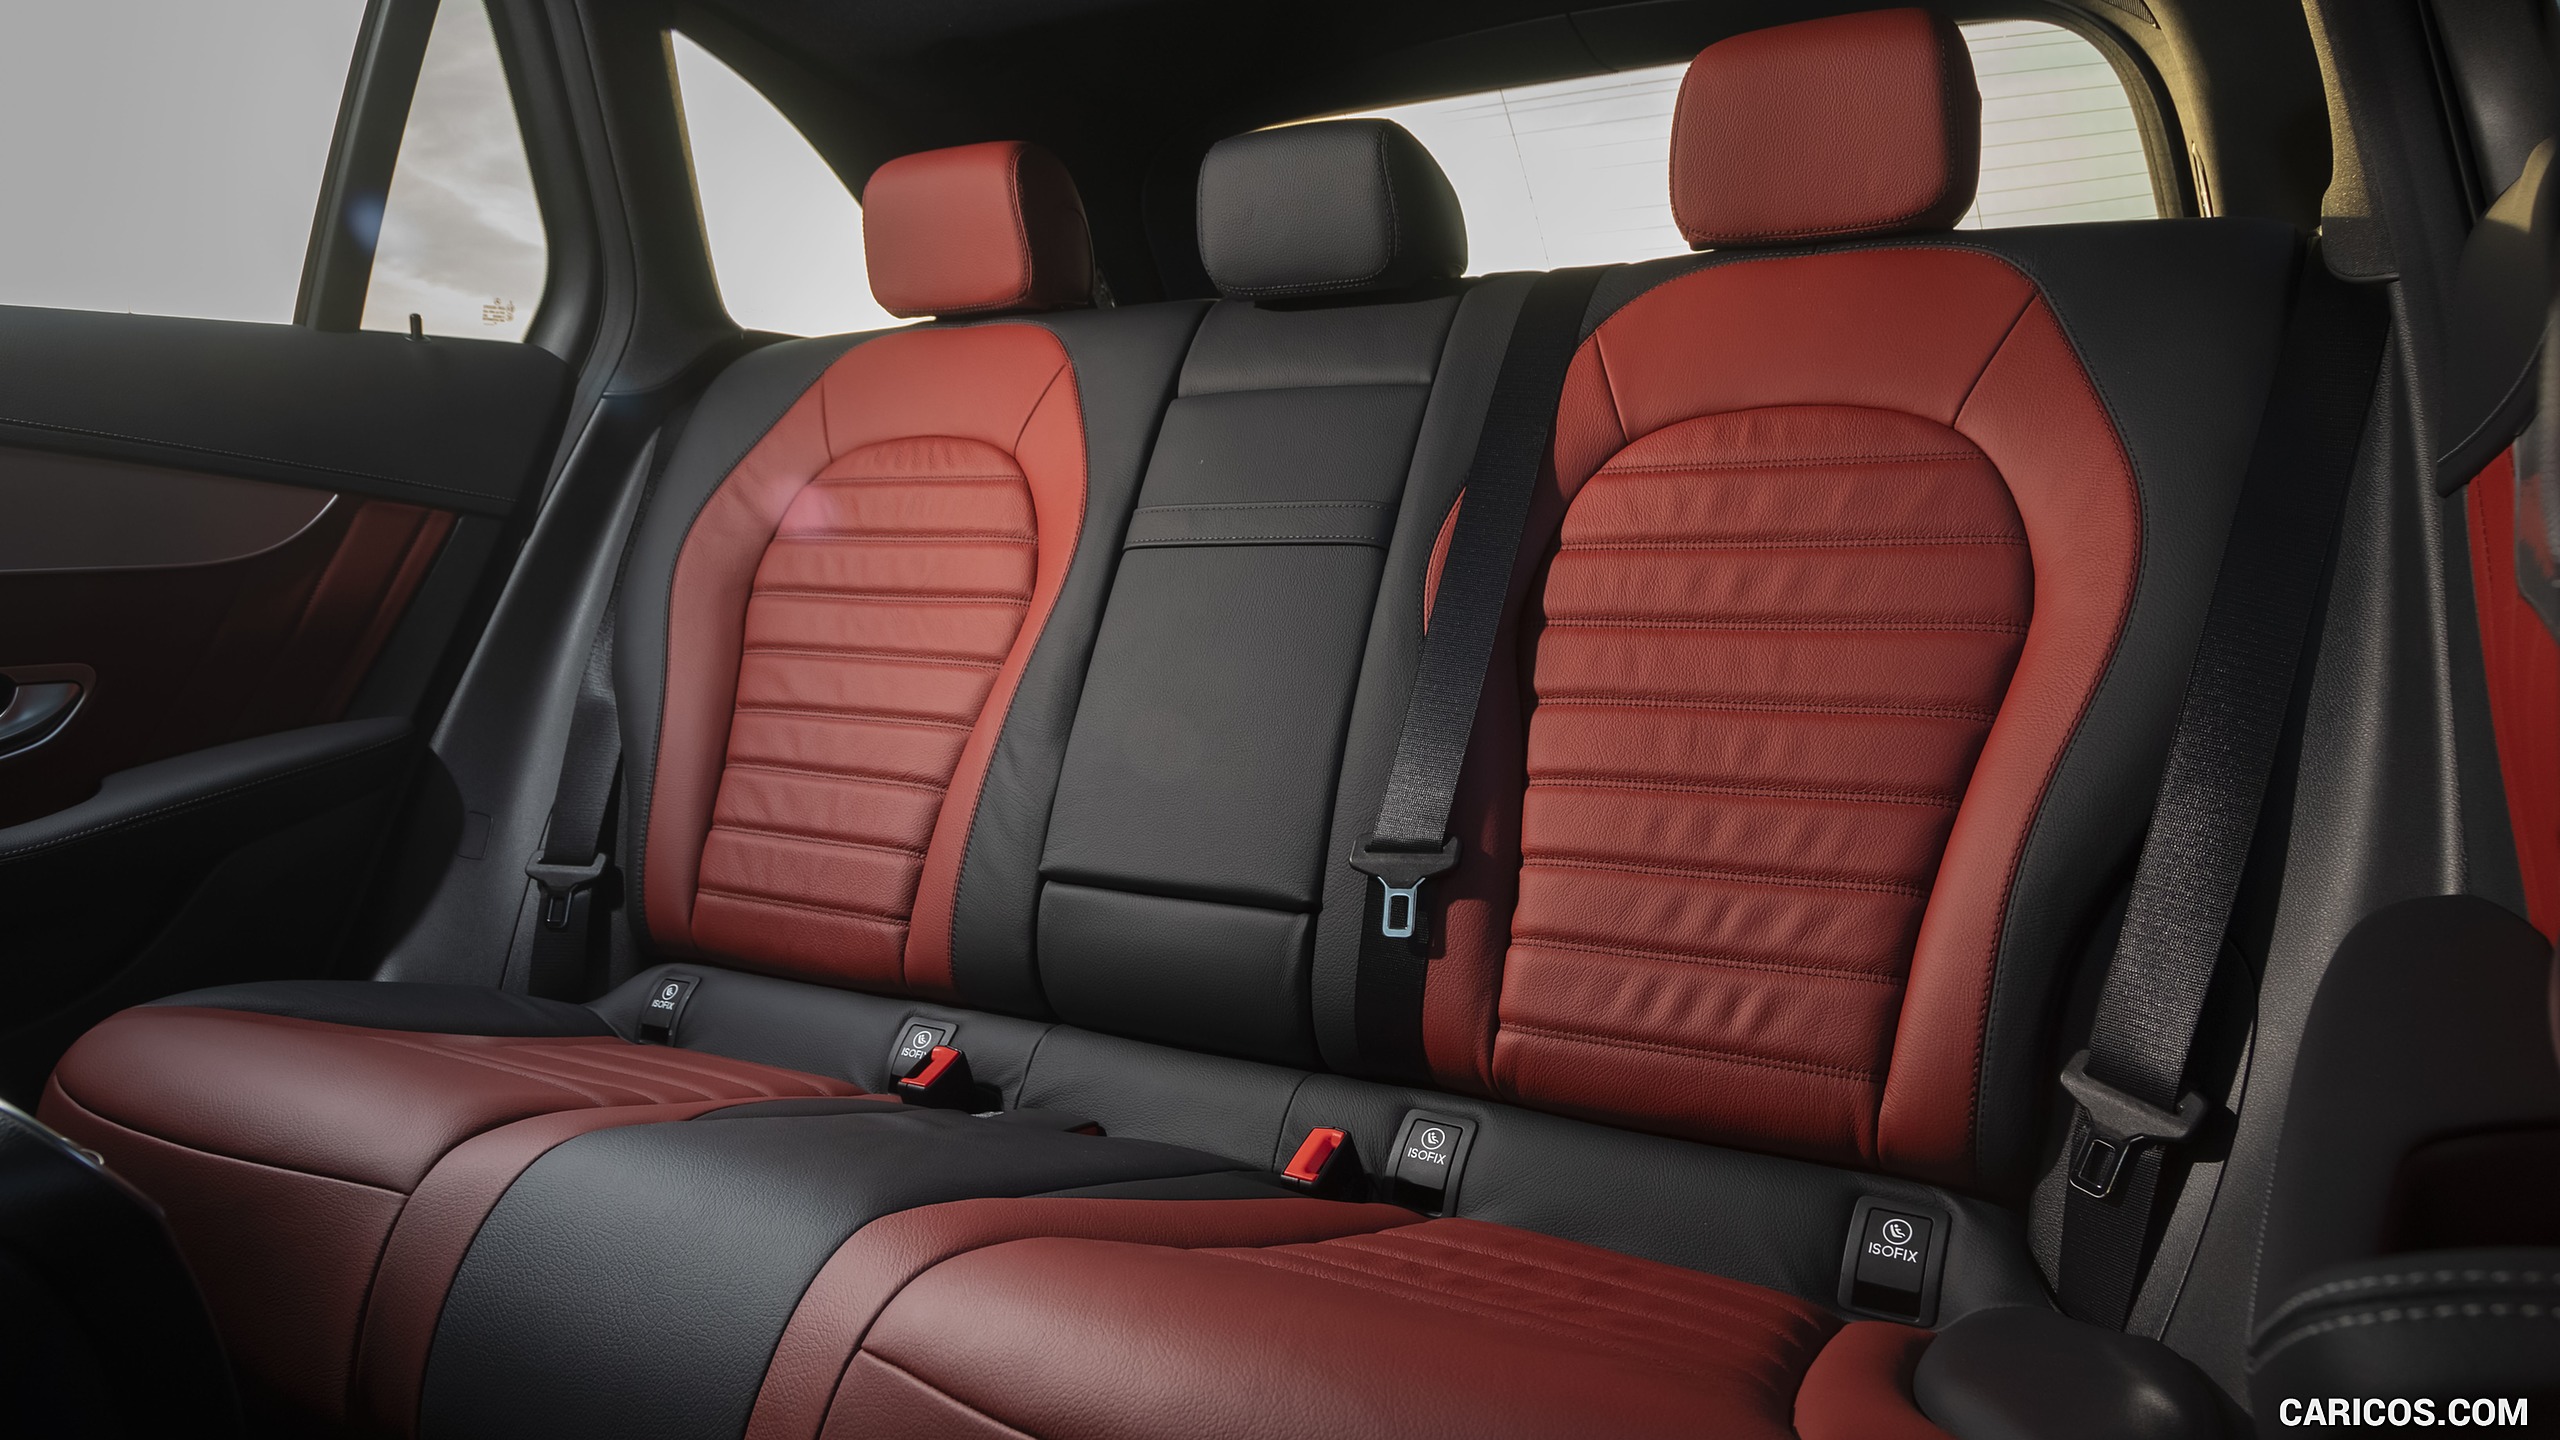 2020 Mercedes-AMG GLC 43 (US-Spec) - Interior, Rear Seats, #86 of 86